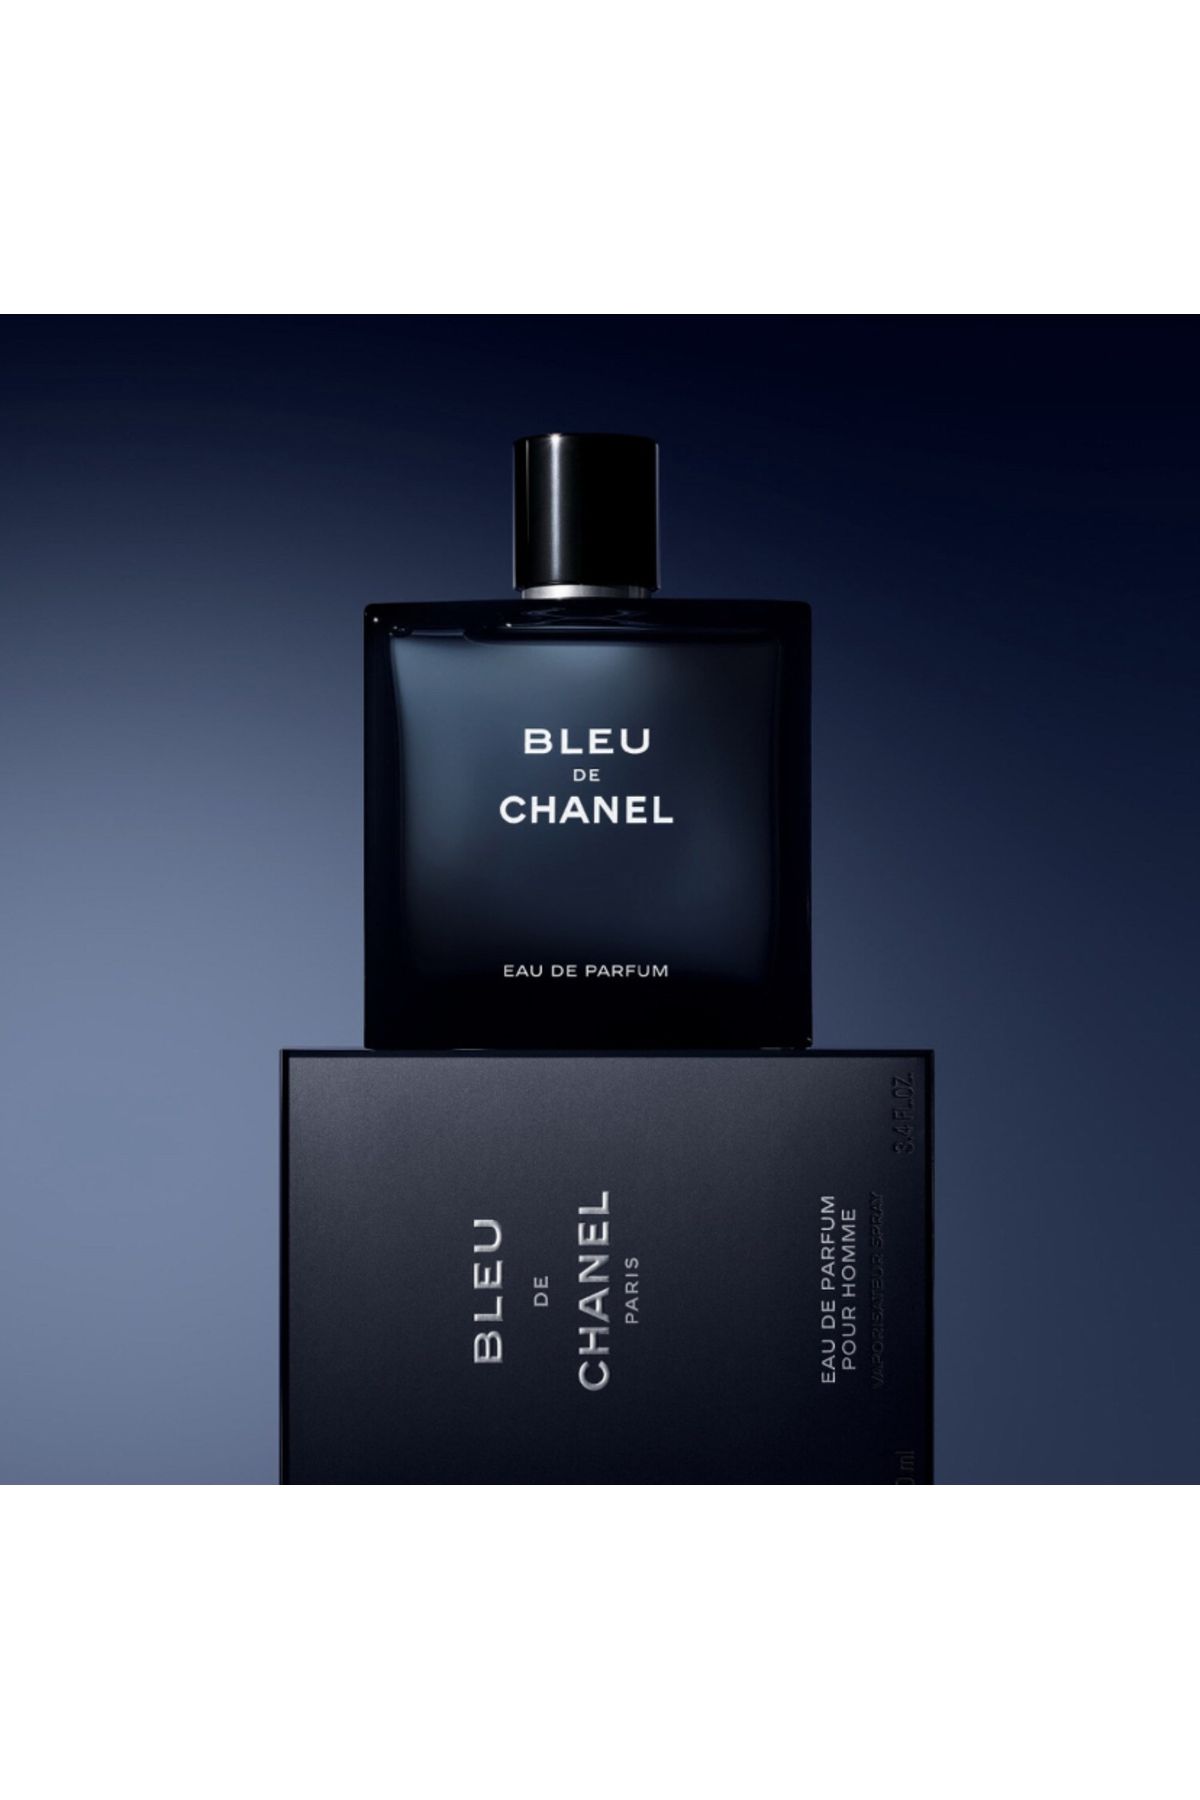 Chanel BLEU DE CHANEL EDP 50ml Pinkestcosmetics